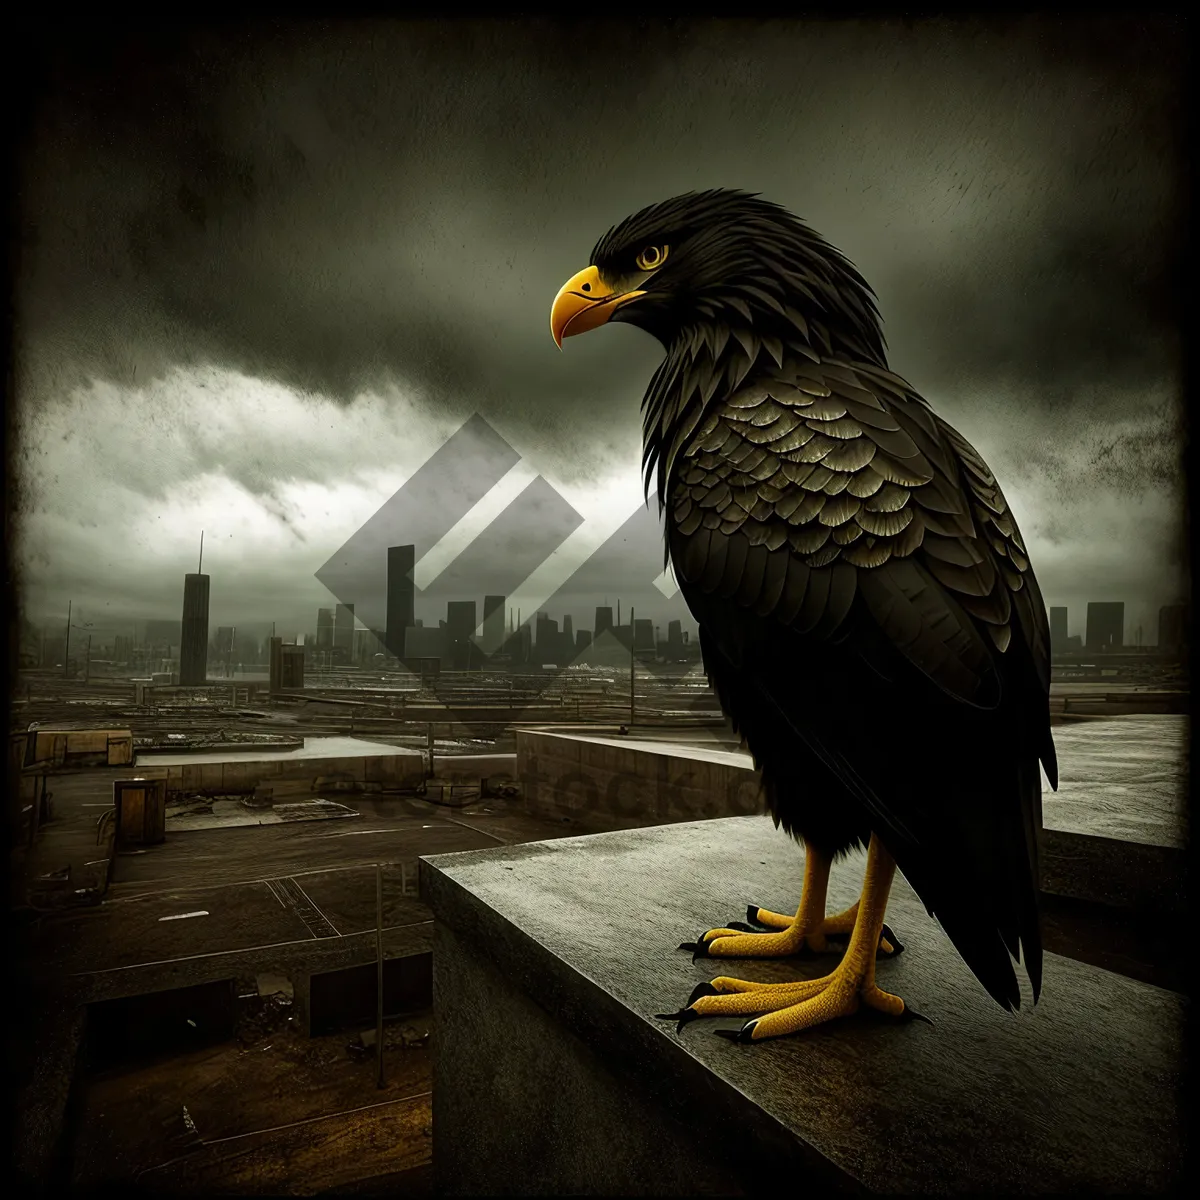 Picture of Majestic Predator: Bald Eagle in Feathered Splendor